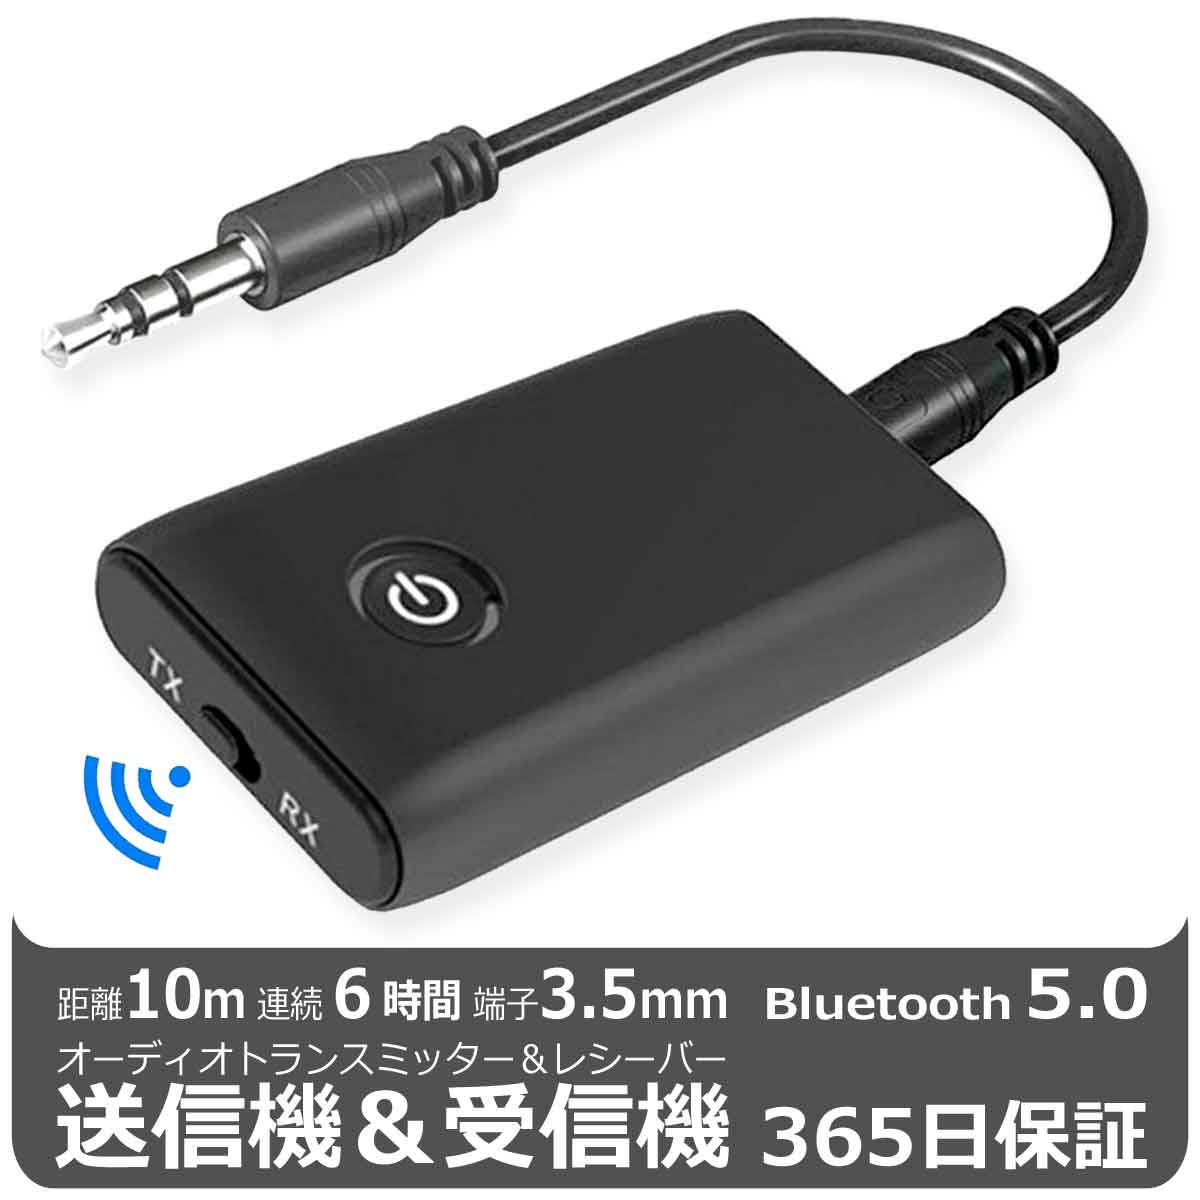 Bluetooth 5.0 オーディオ トランスミッター レシーバー ブルートゥース 送信機 受信機 ワイヤレス 無線 接続機器 3.5mm  AUX 端子 音声 音楽 送信 受信 充電式 後付け Bluetooth テレビ スピーカー 無線化